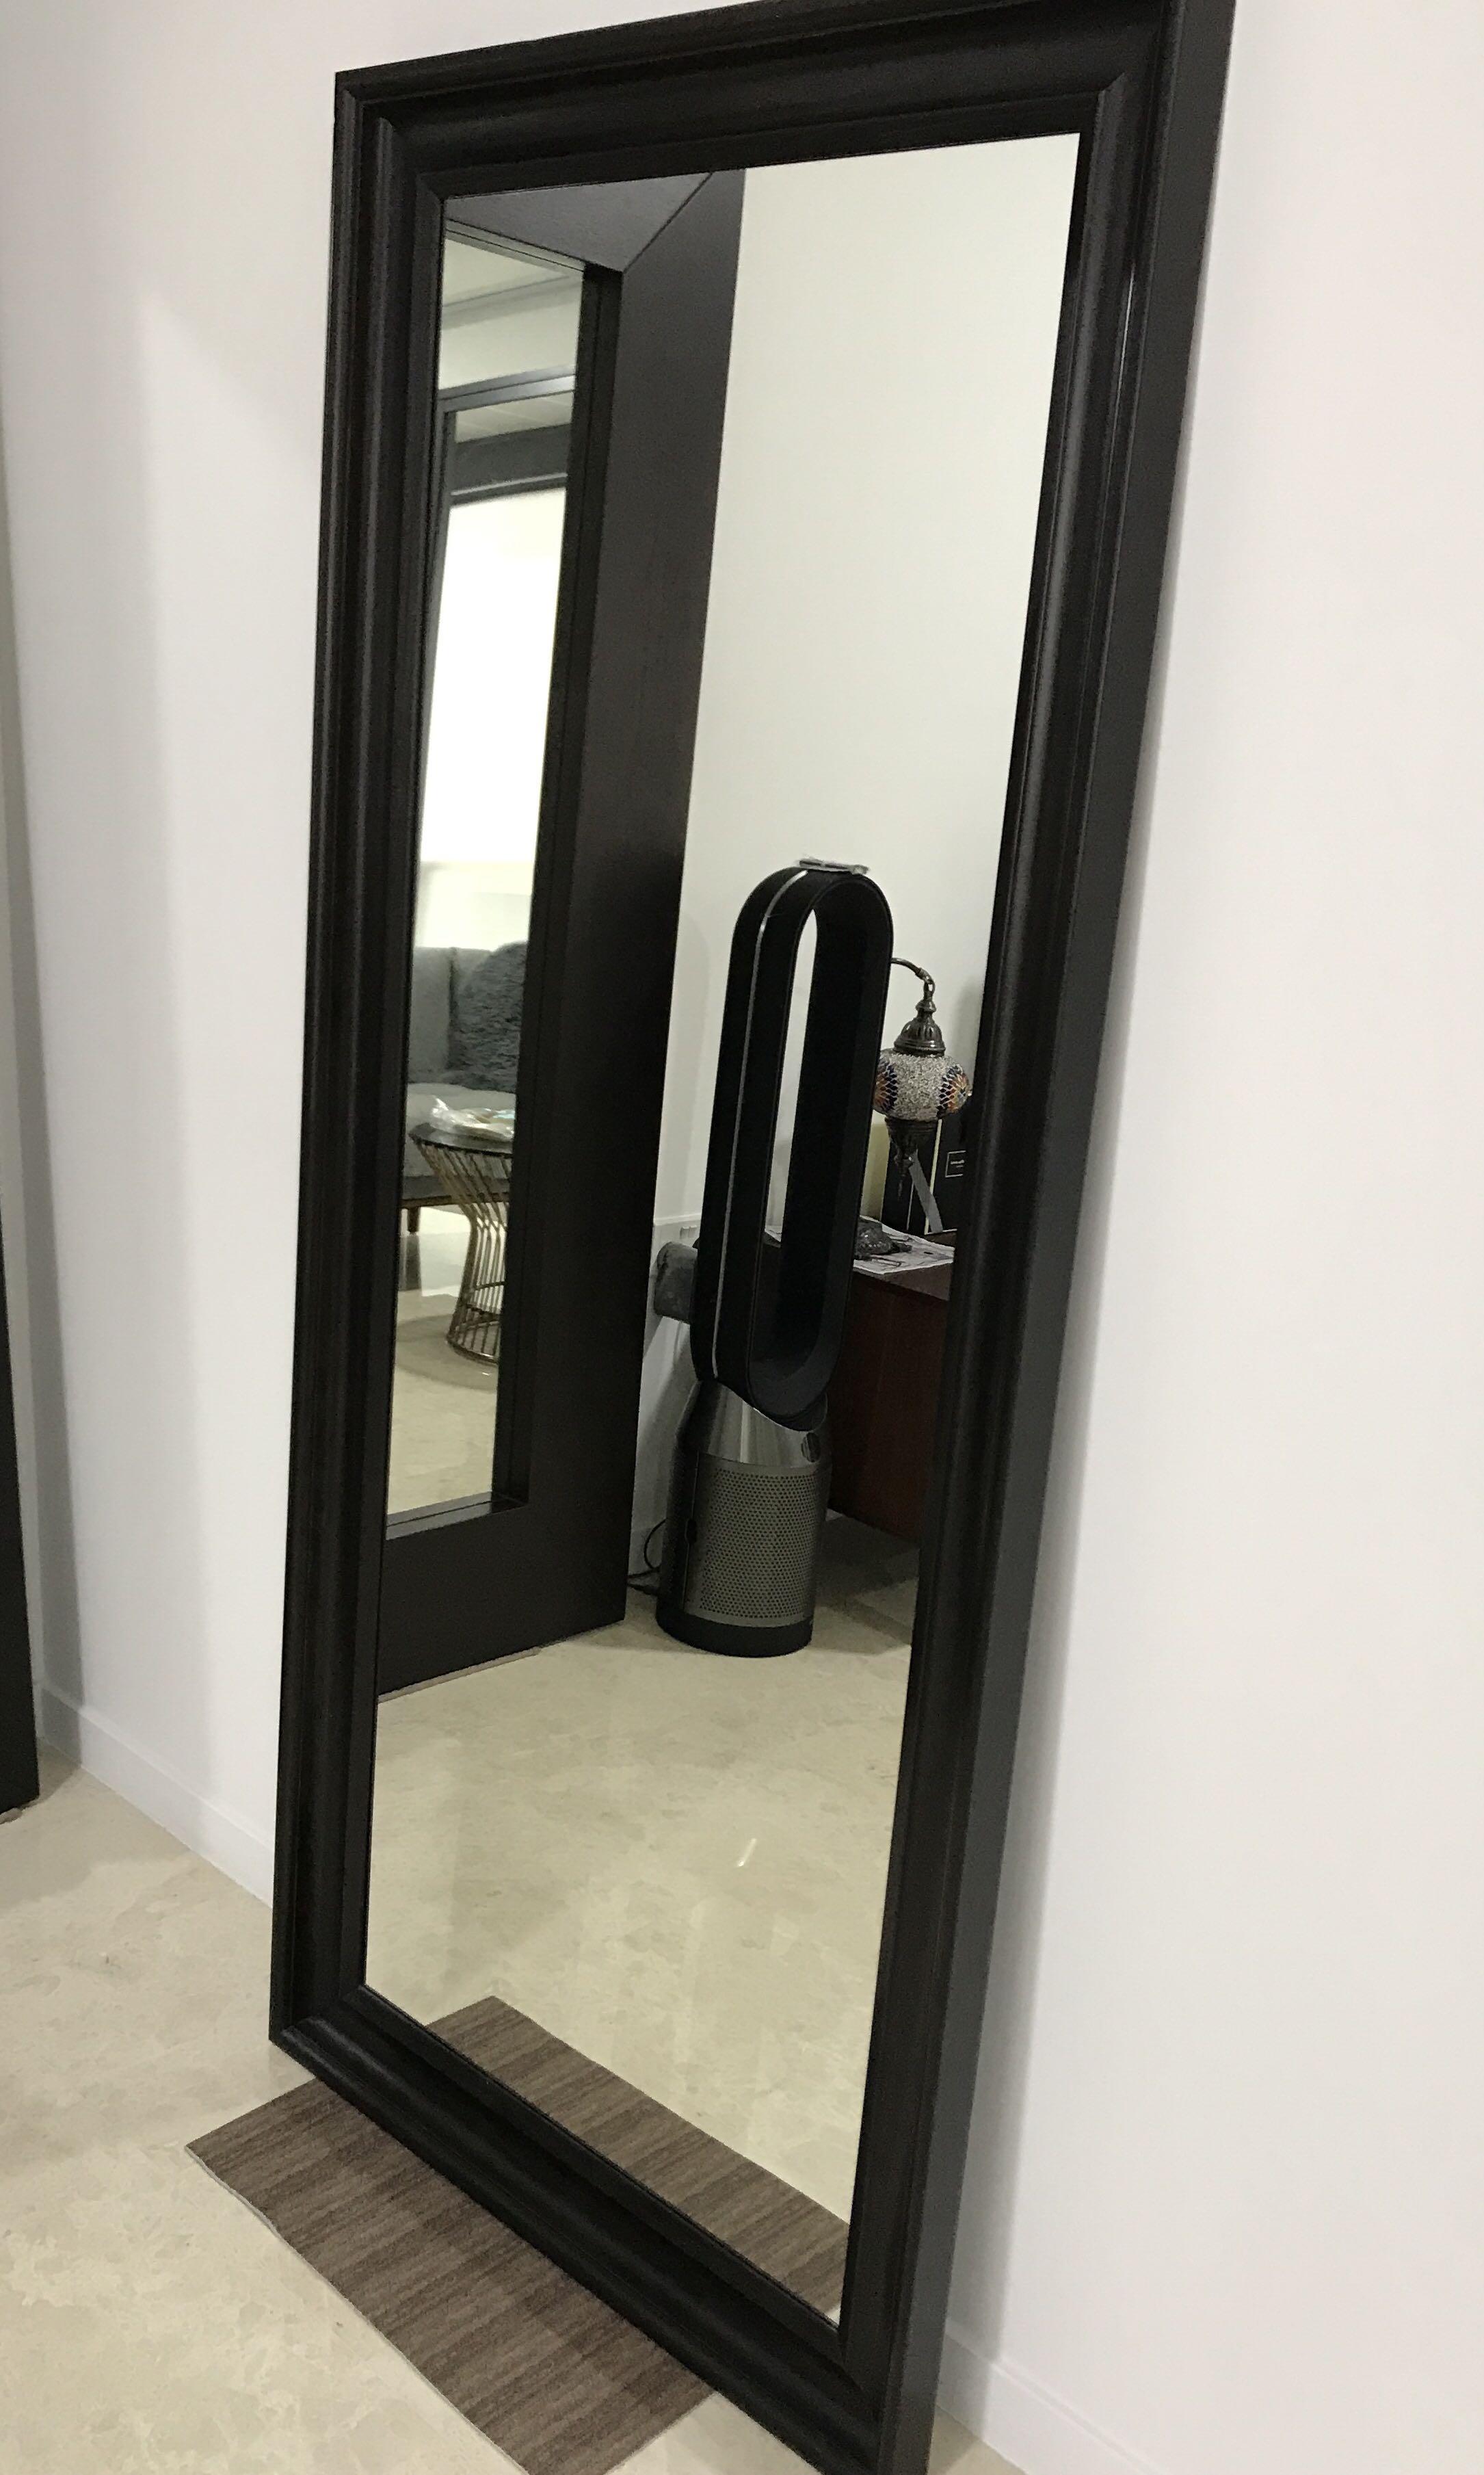 HOVET Mirror, black, 303/4x771/8 - IKEA